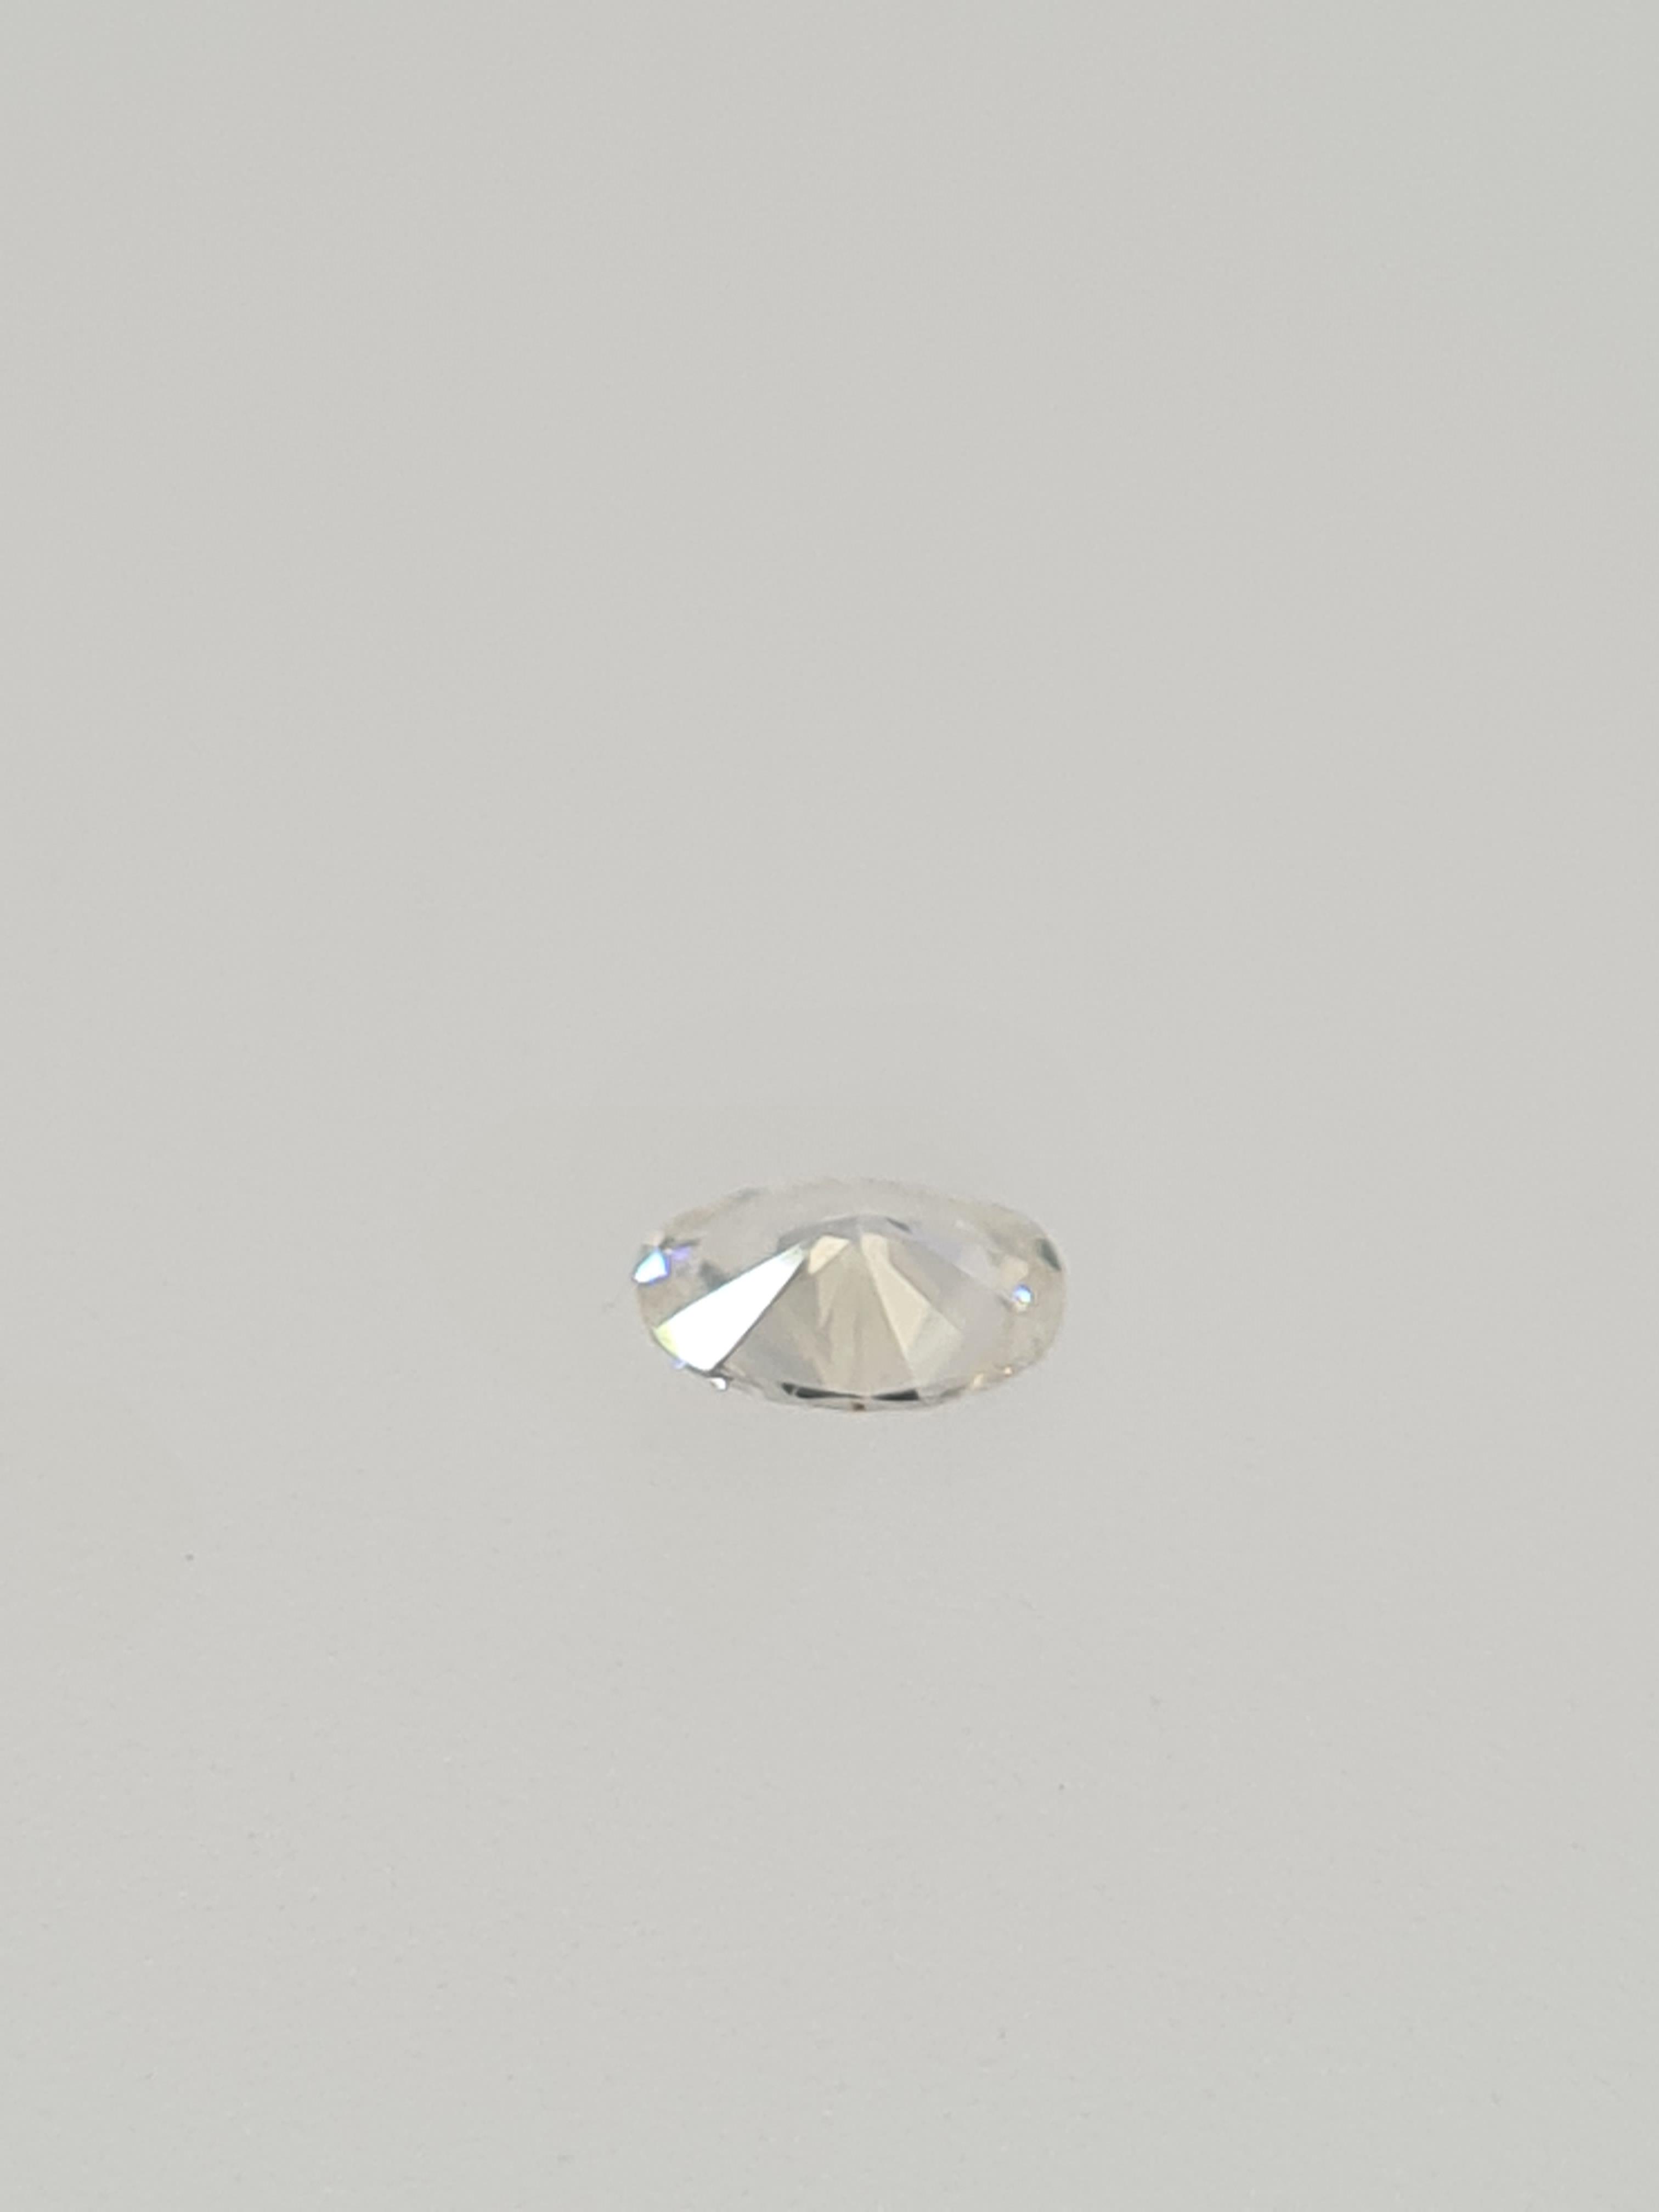 Oval cut diamond - Image 3 of 5